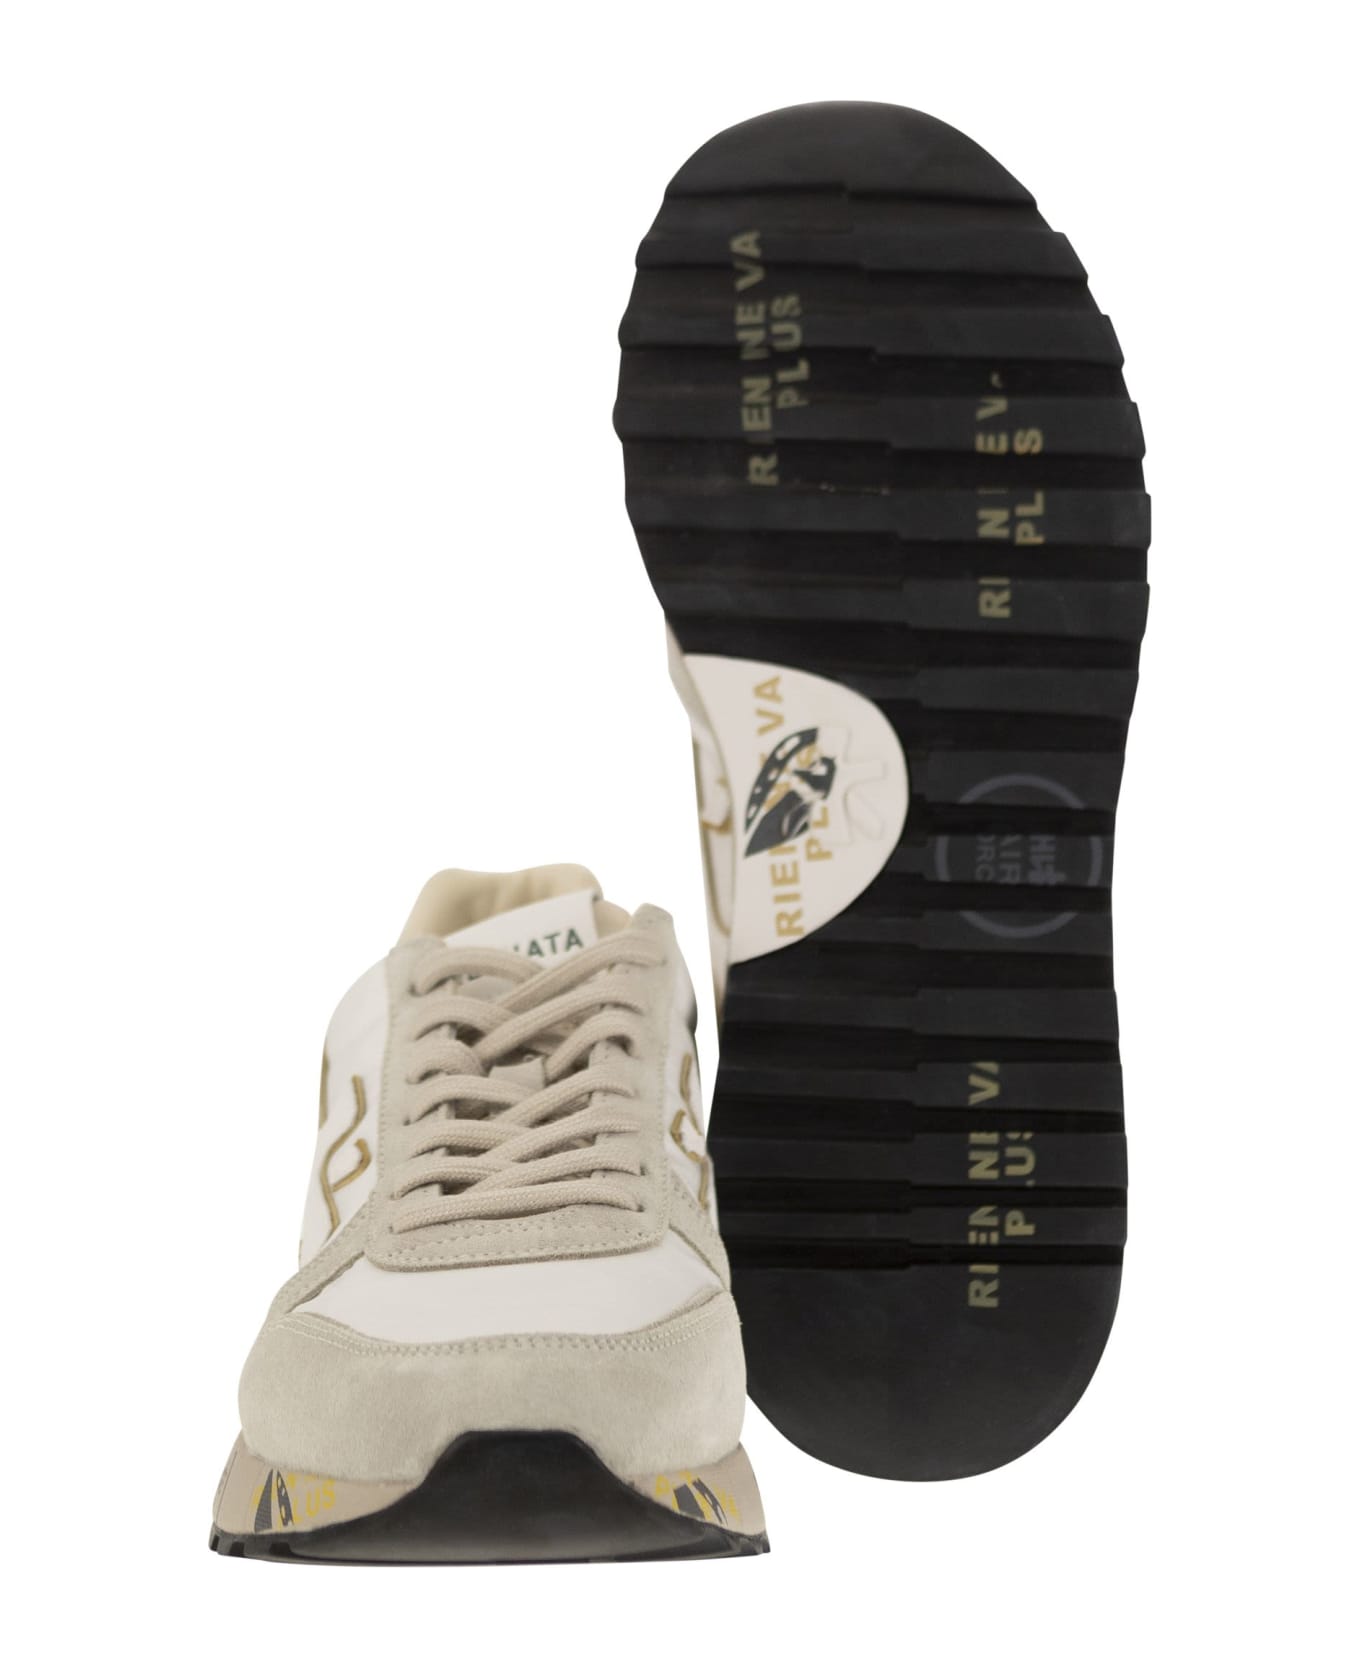 Premiata Mick Suede, Nylon And Leather Sneakers - White/grey